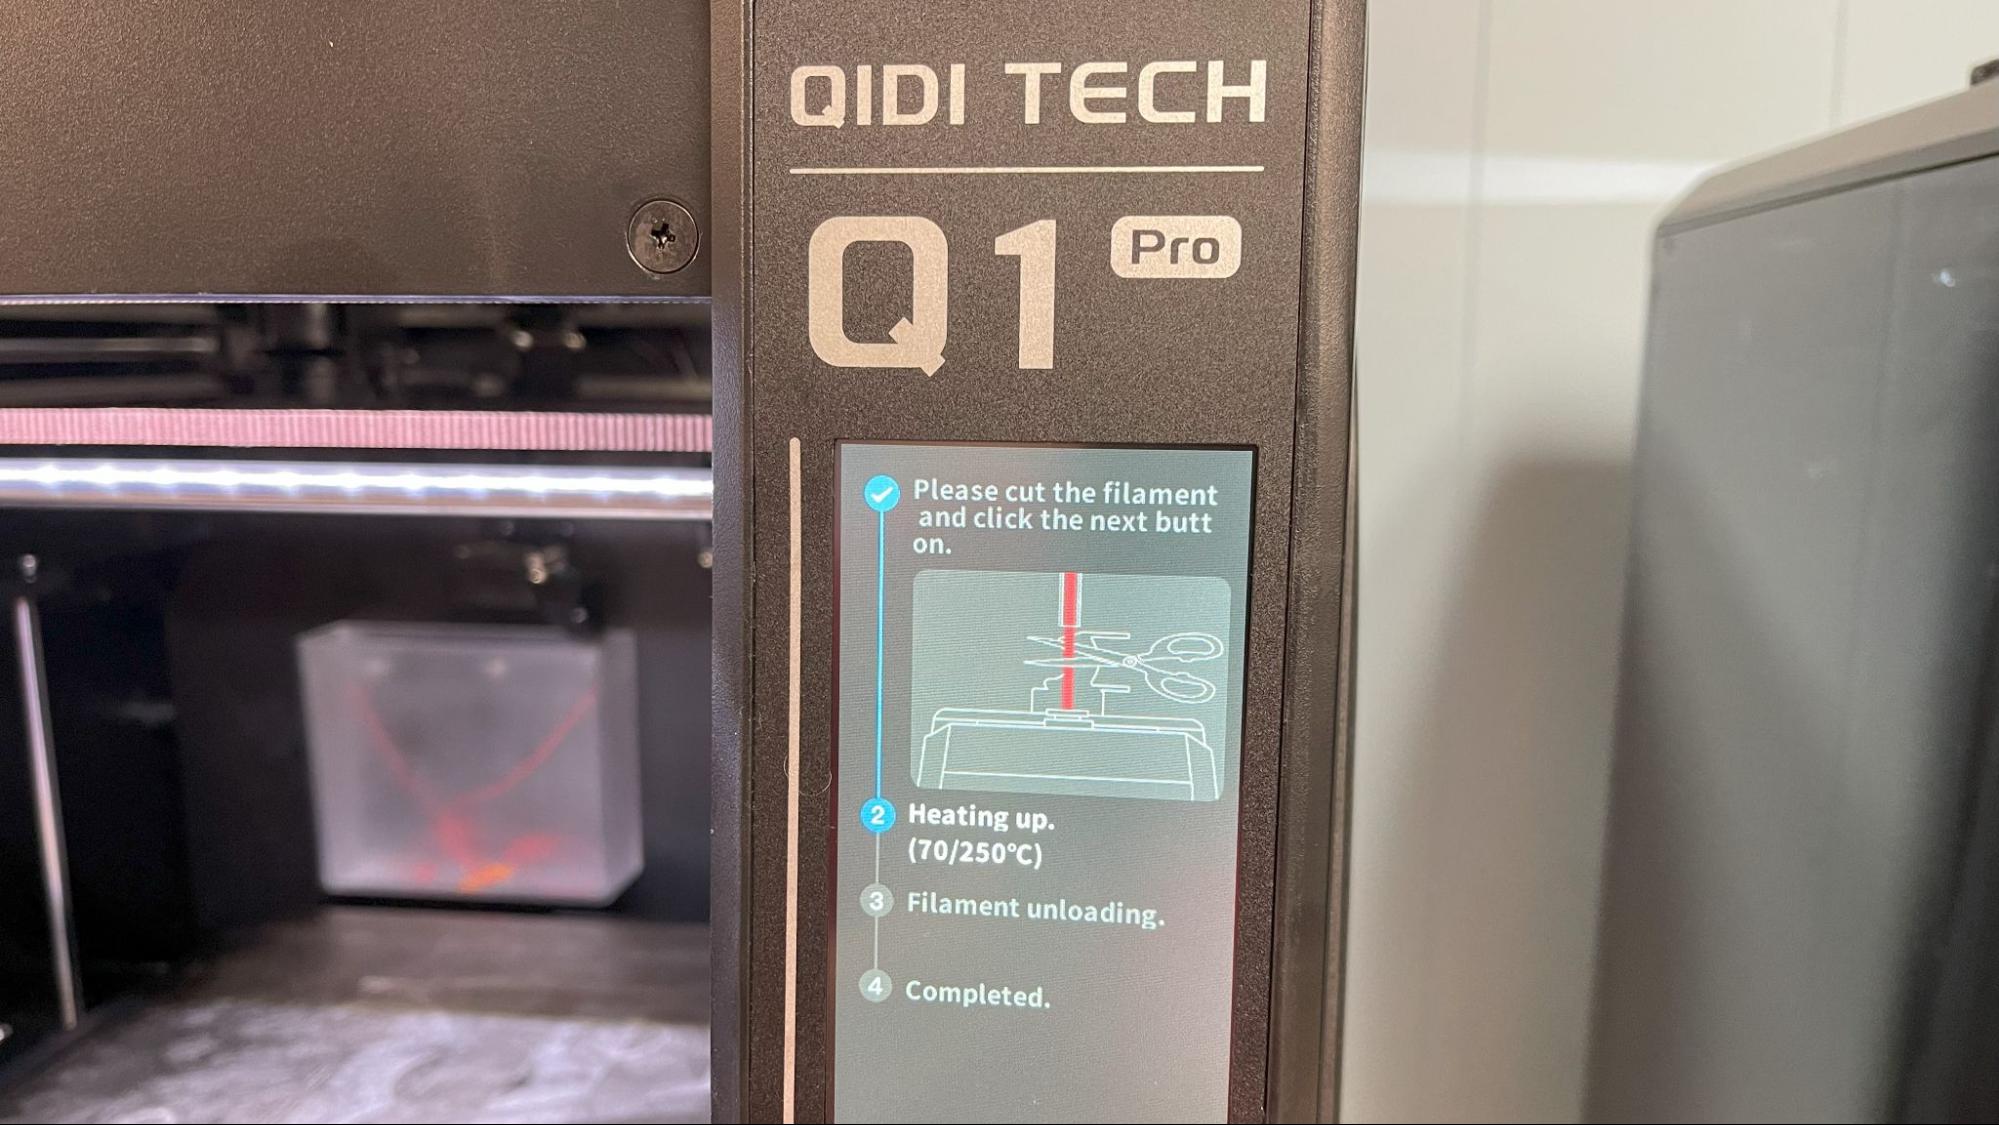 QIDI Tech Q1 Pro